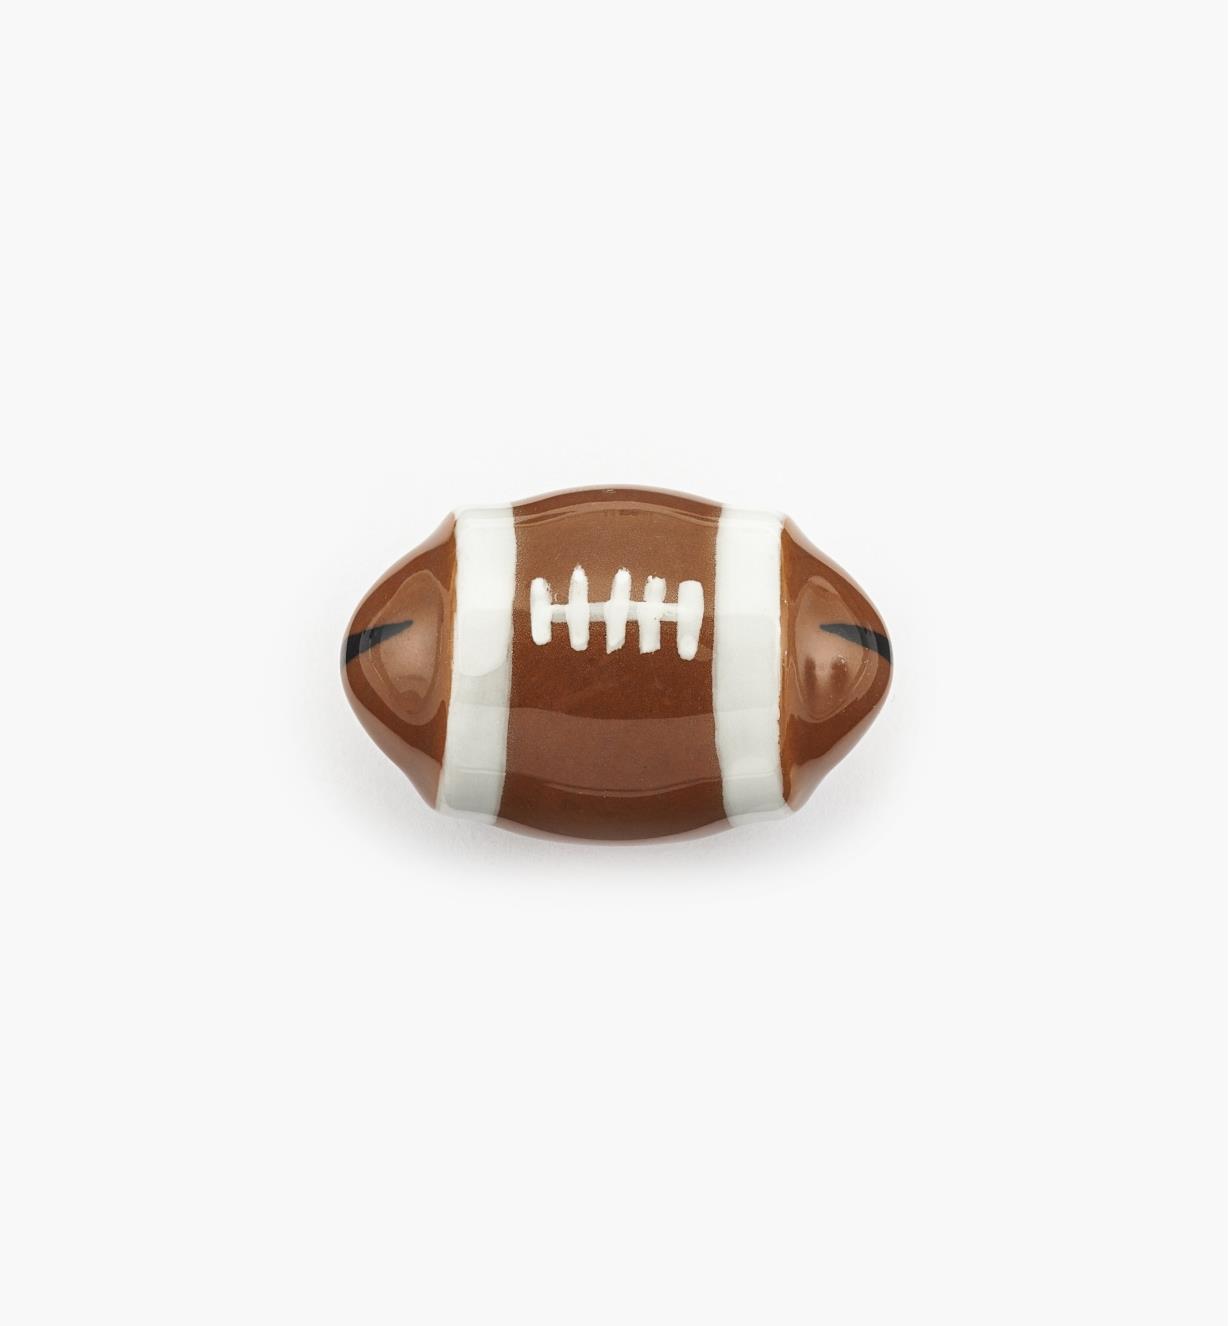 00W5324 - 1 3/4" x 1 1/8" Football Ceramic Knob, each